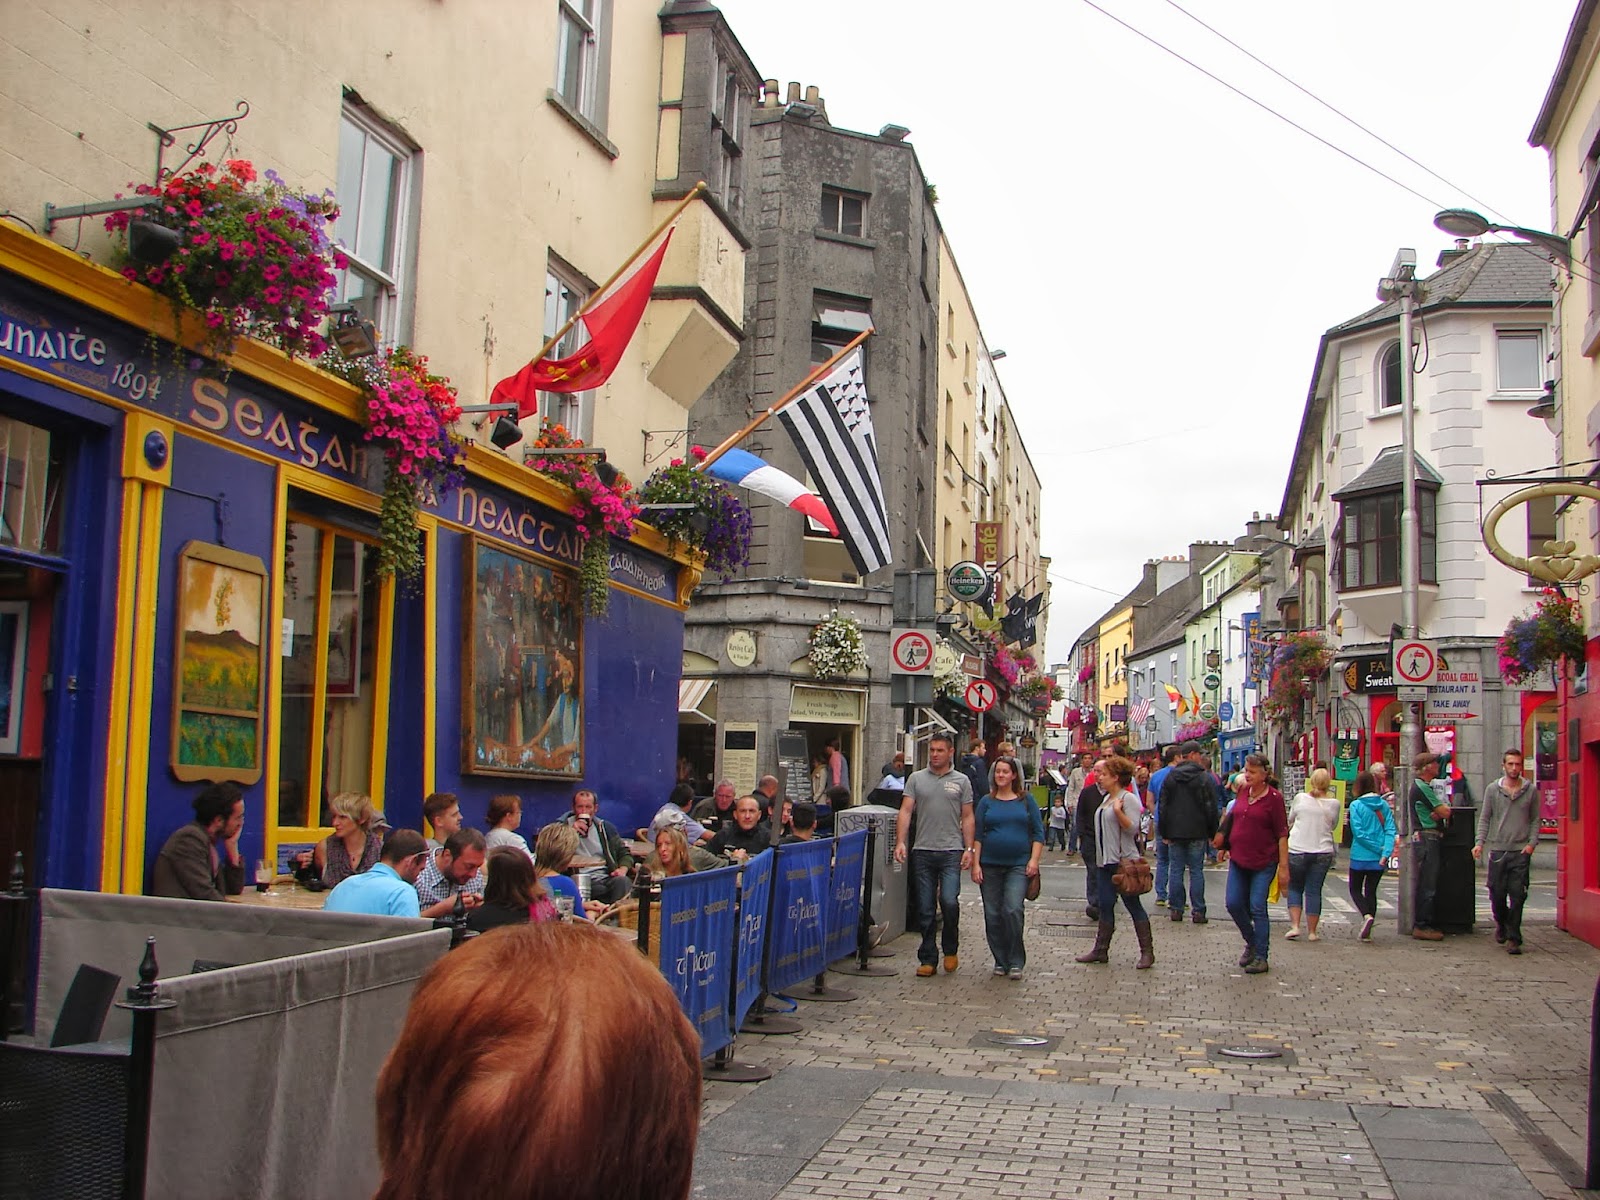 Main Guard St. de Galway (XMLS, 2013)